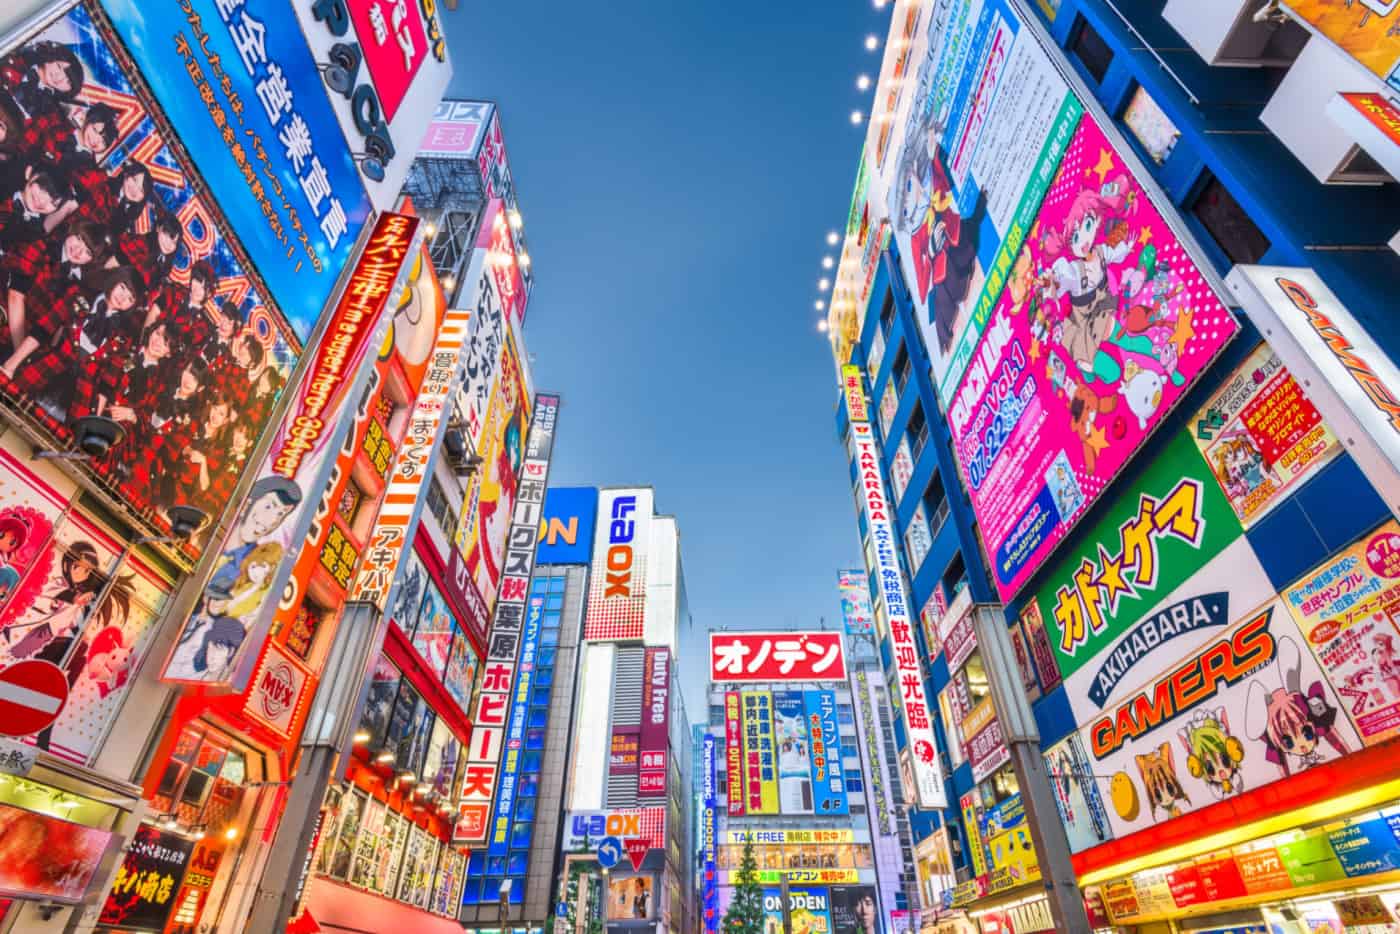 https://www.neverendingfootsteps.com/wp-content/uploads/2022/06/The-colorful-signs-in-Akihabara-in-Tokyo.jpg